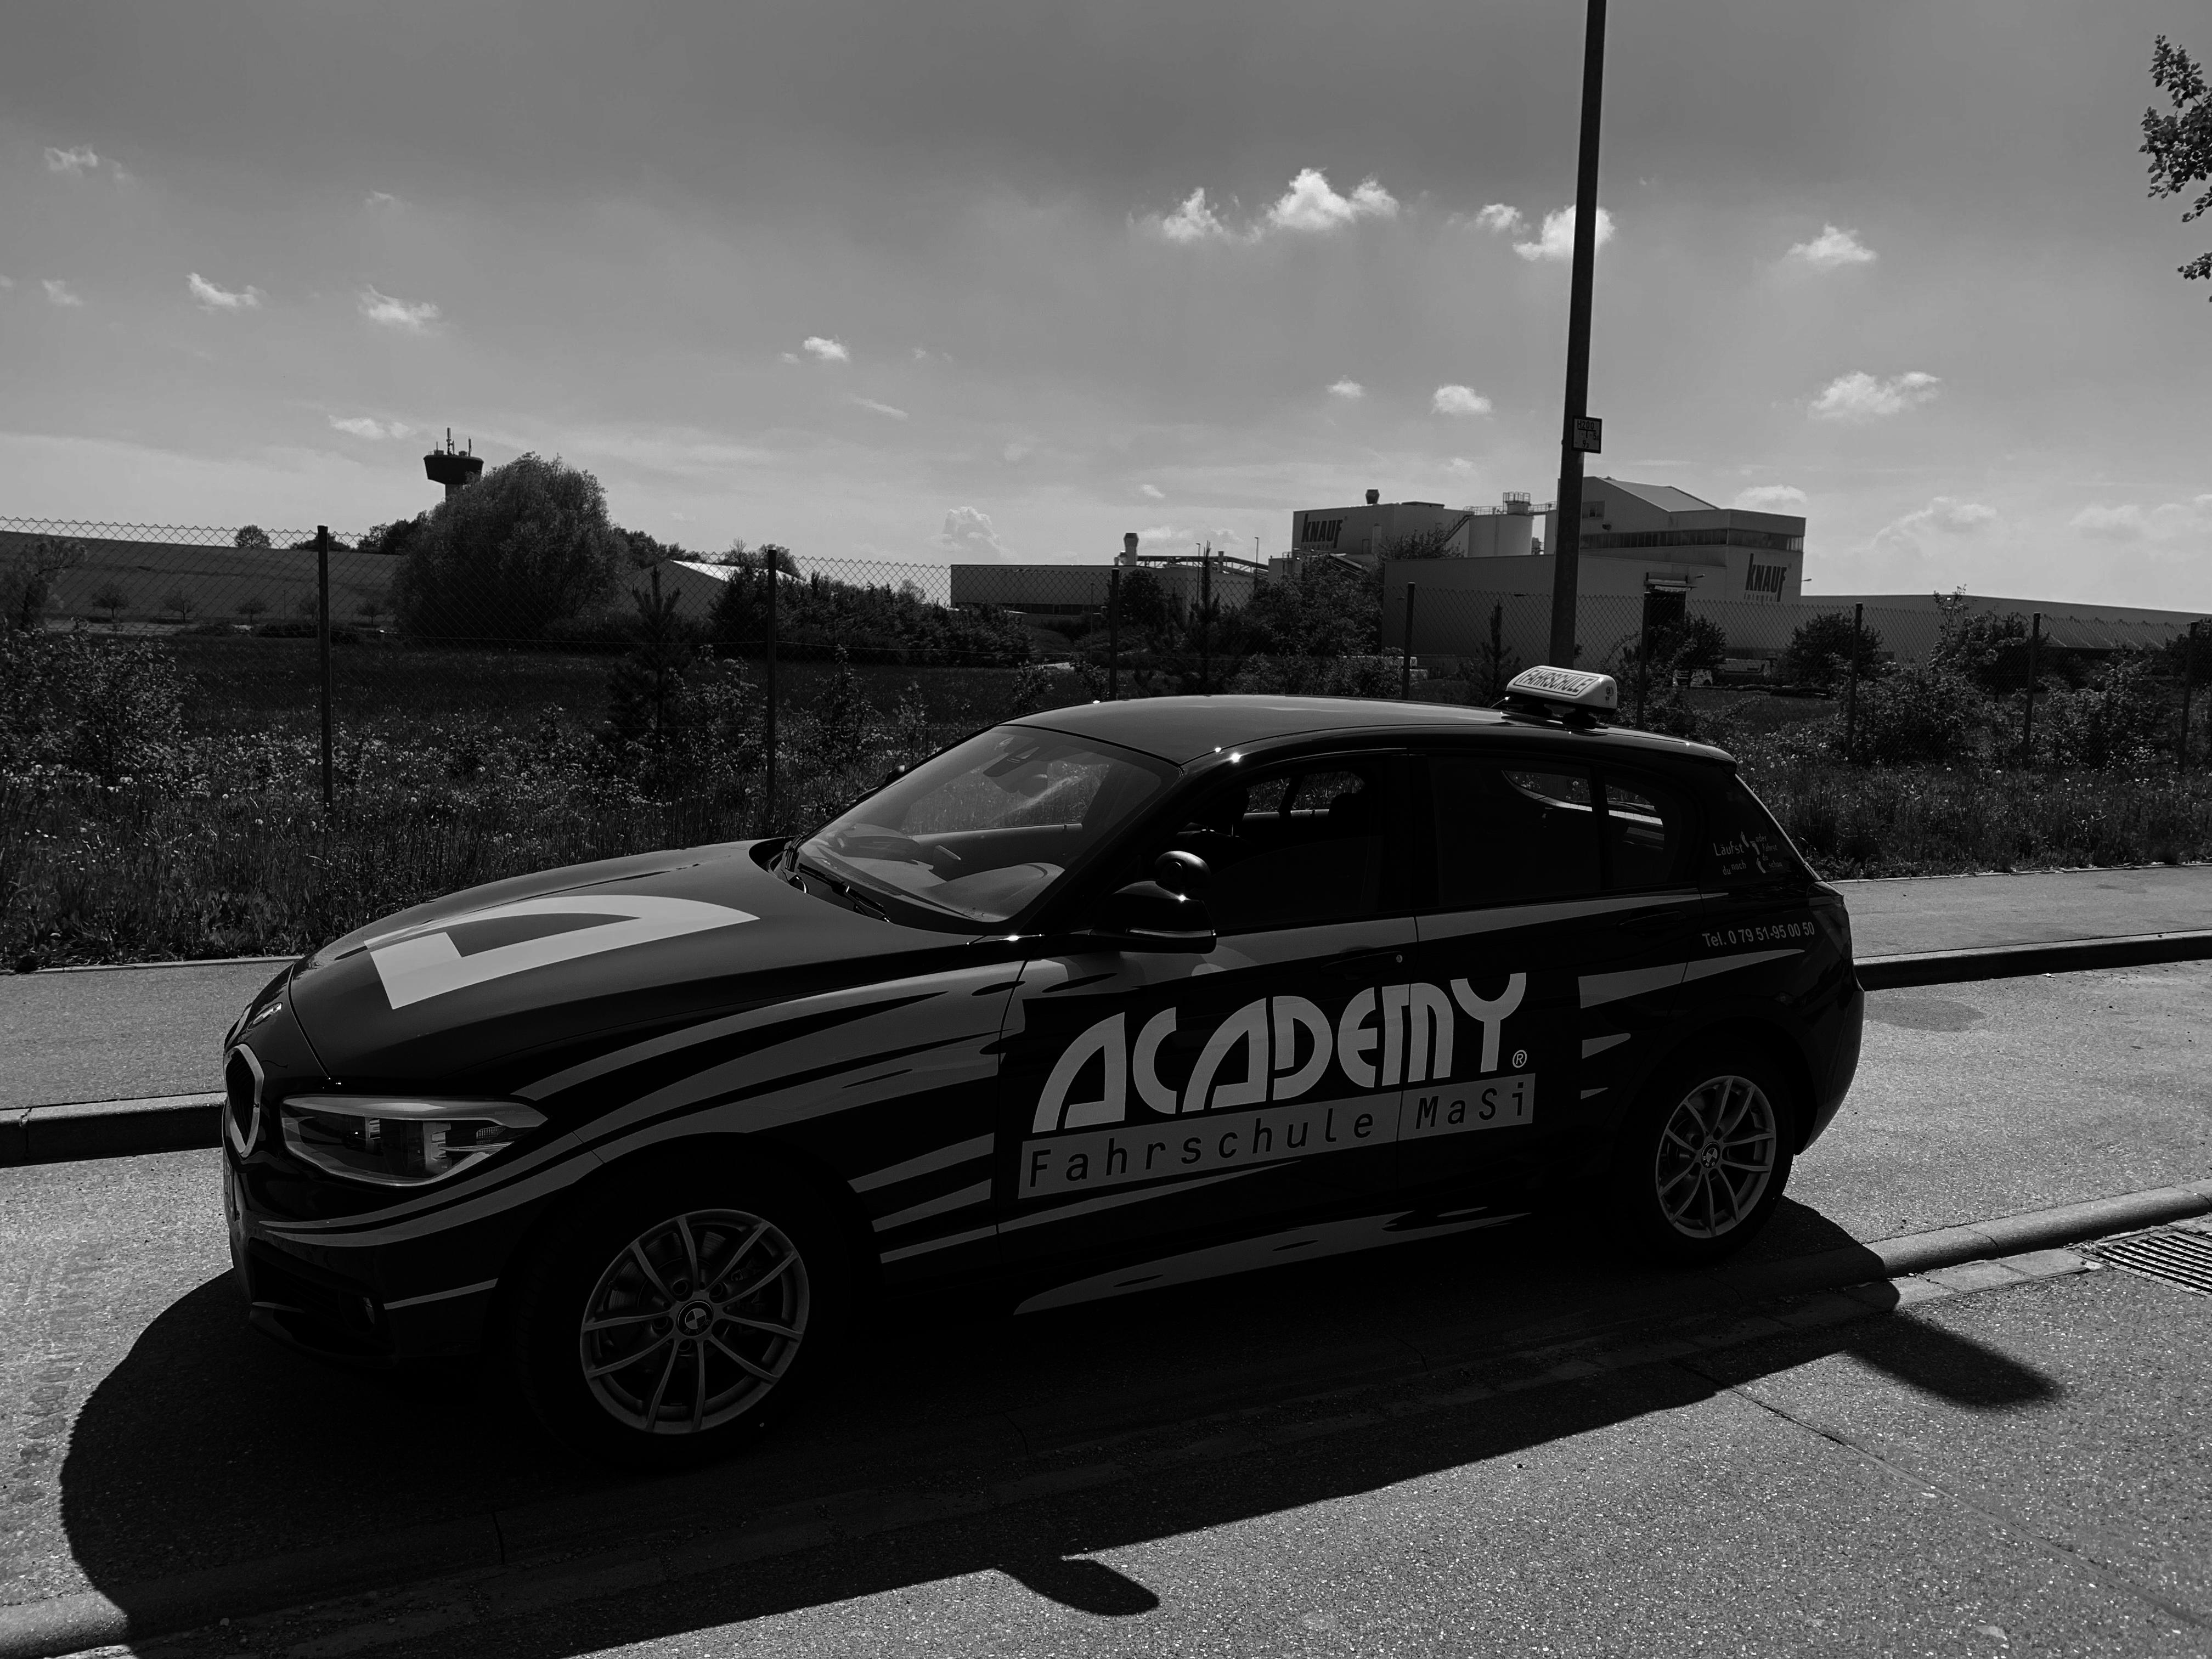 ACADEMY Fahrschule BMW 118